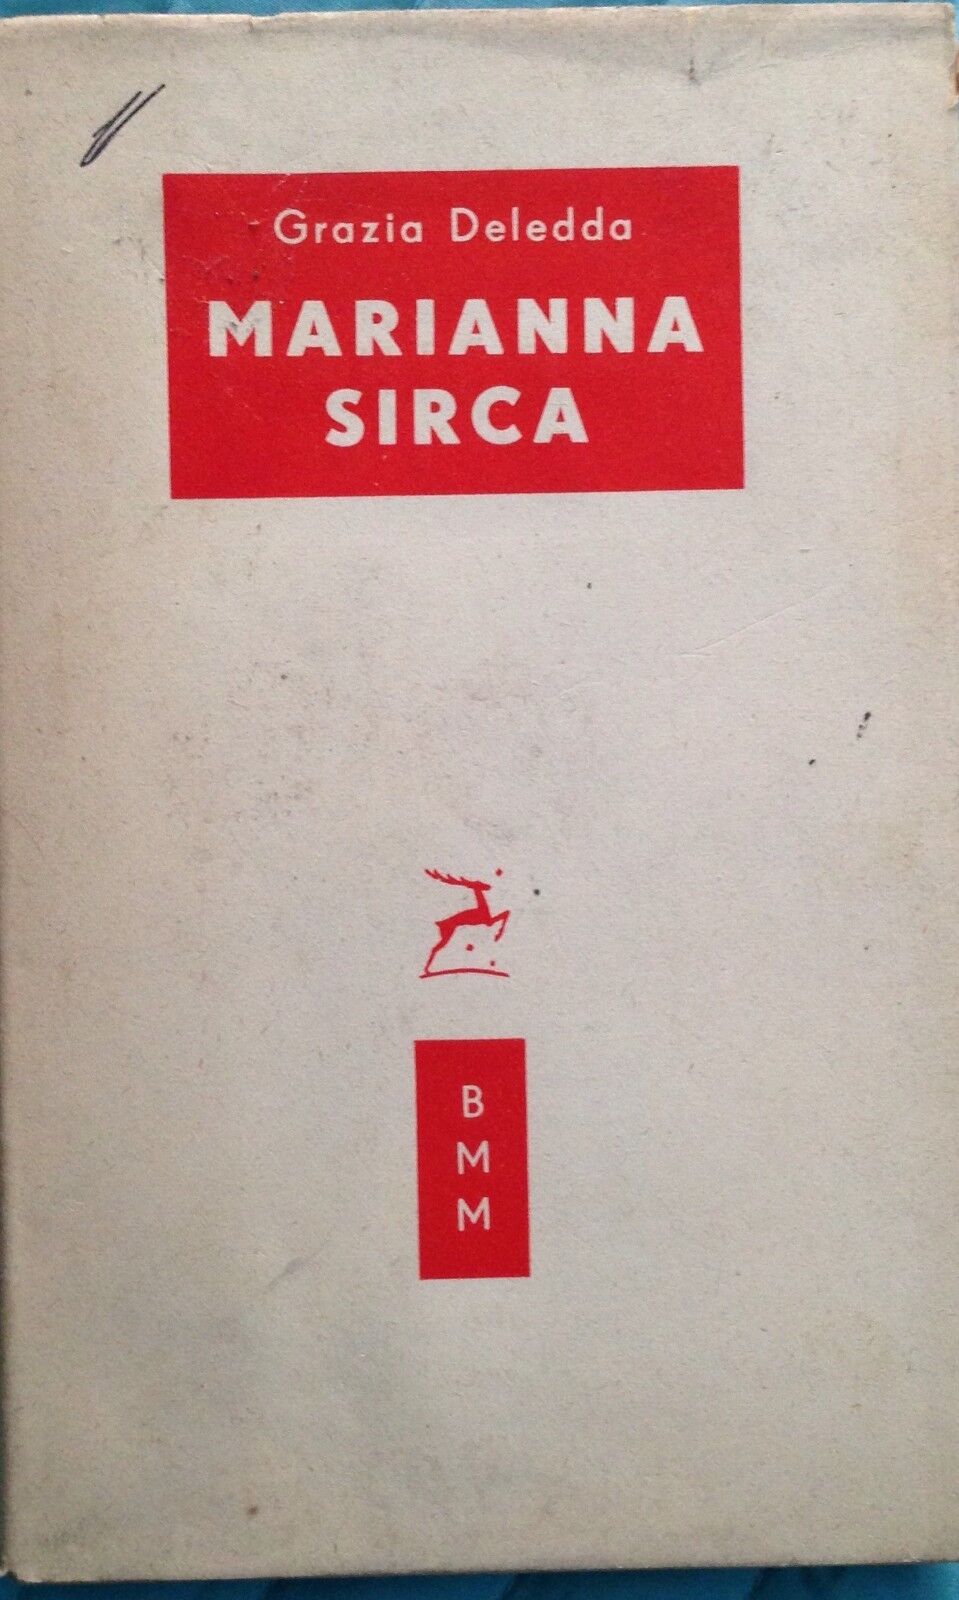 Marianna Sirca - Grazia Deledda - BMM - 1954 - MP